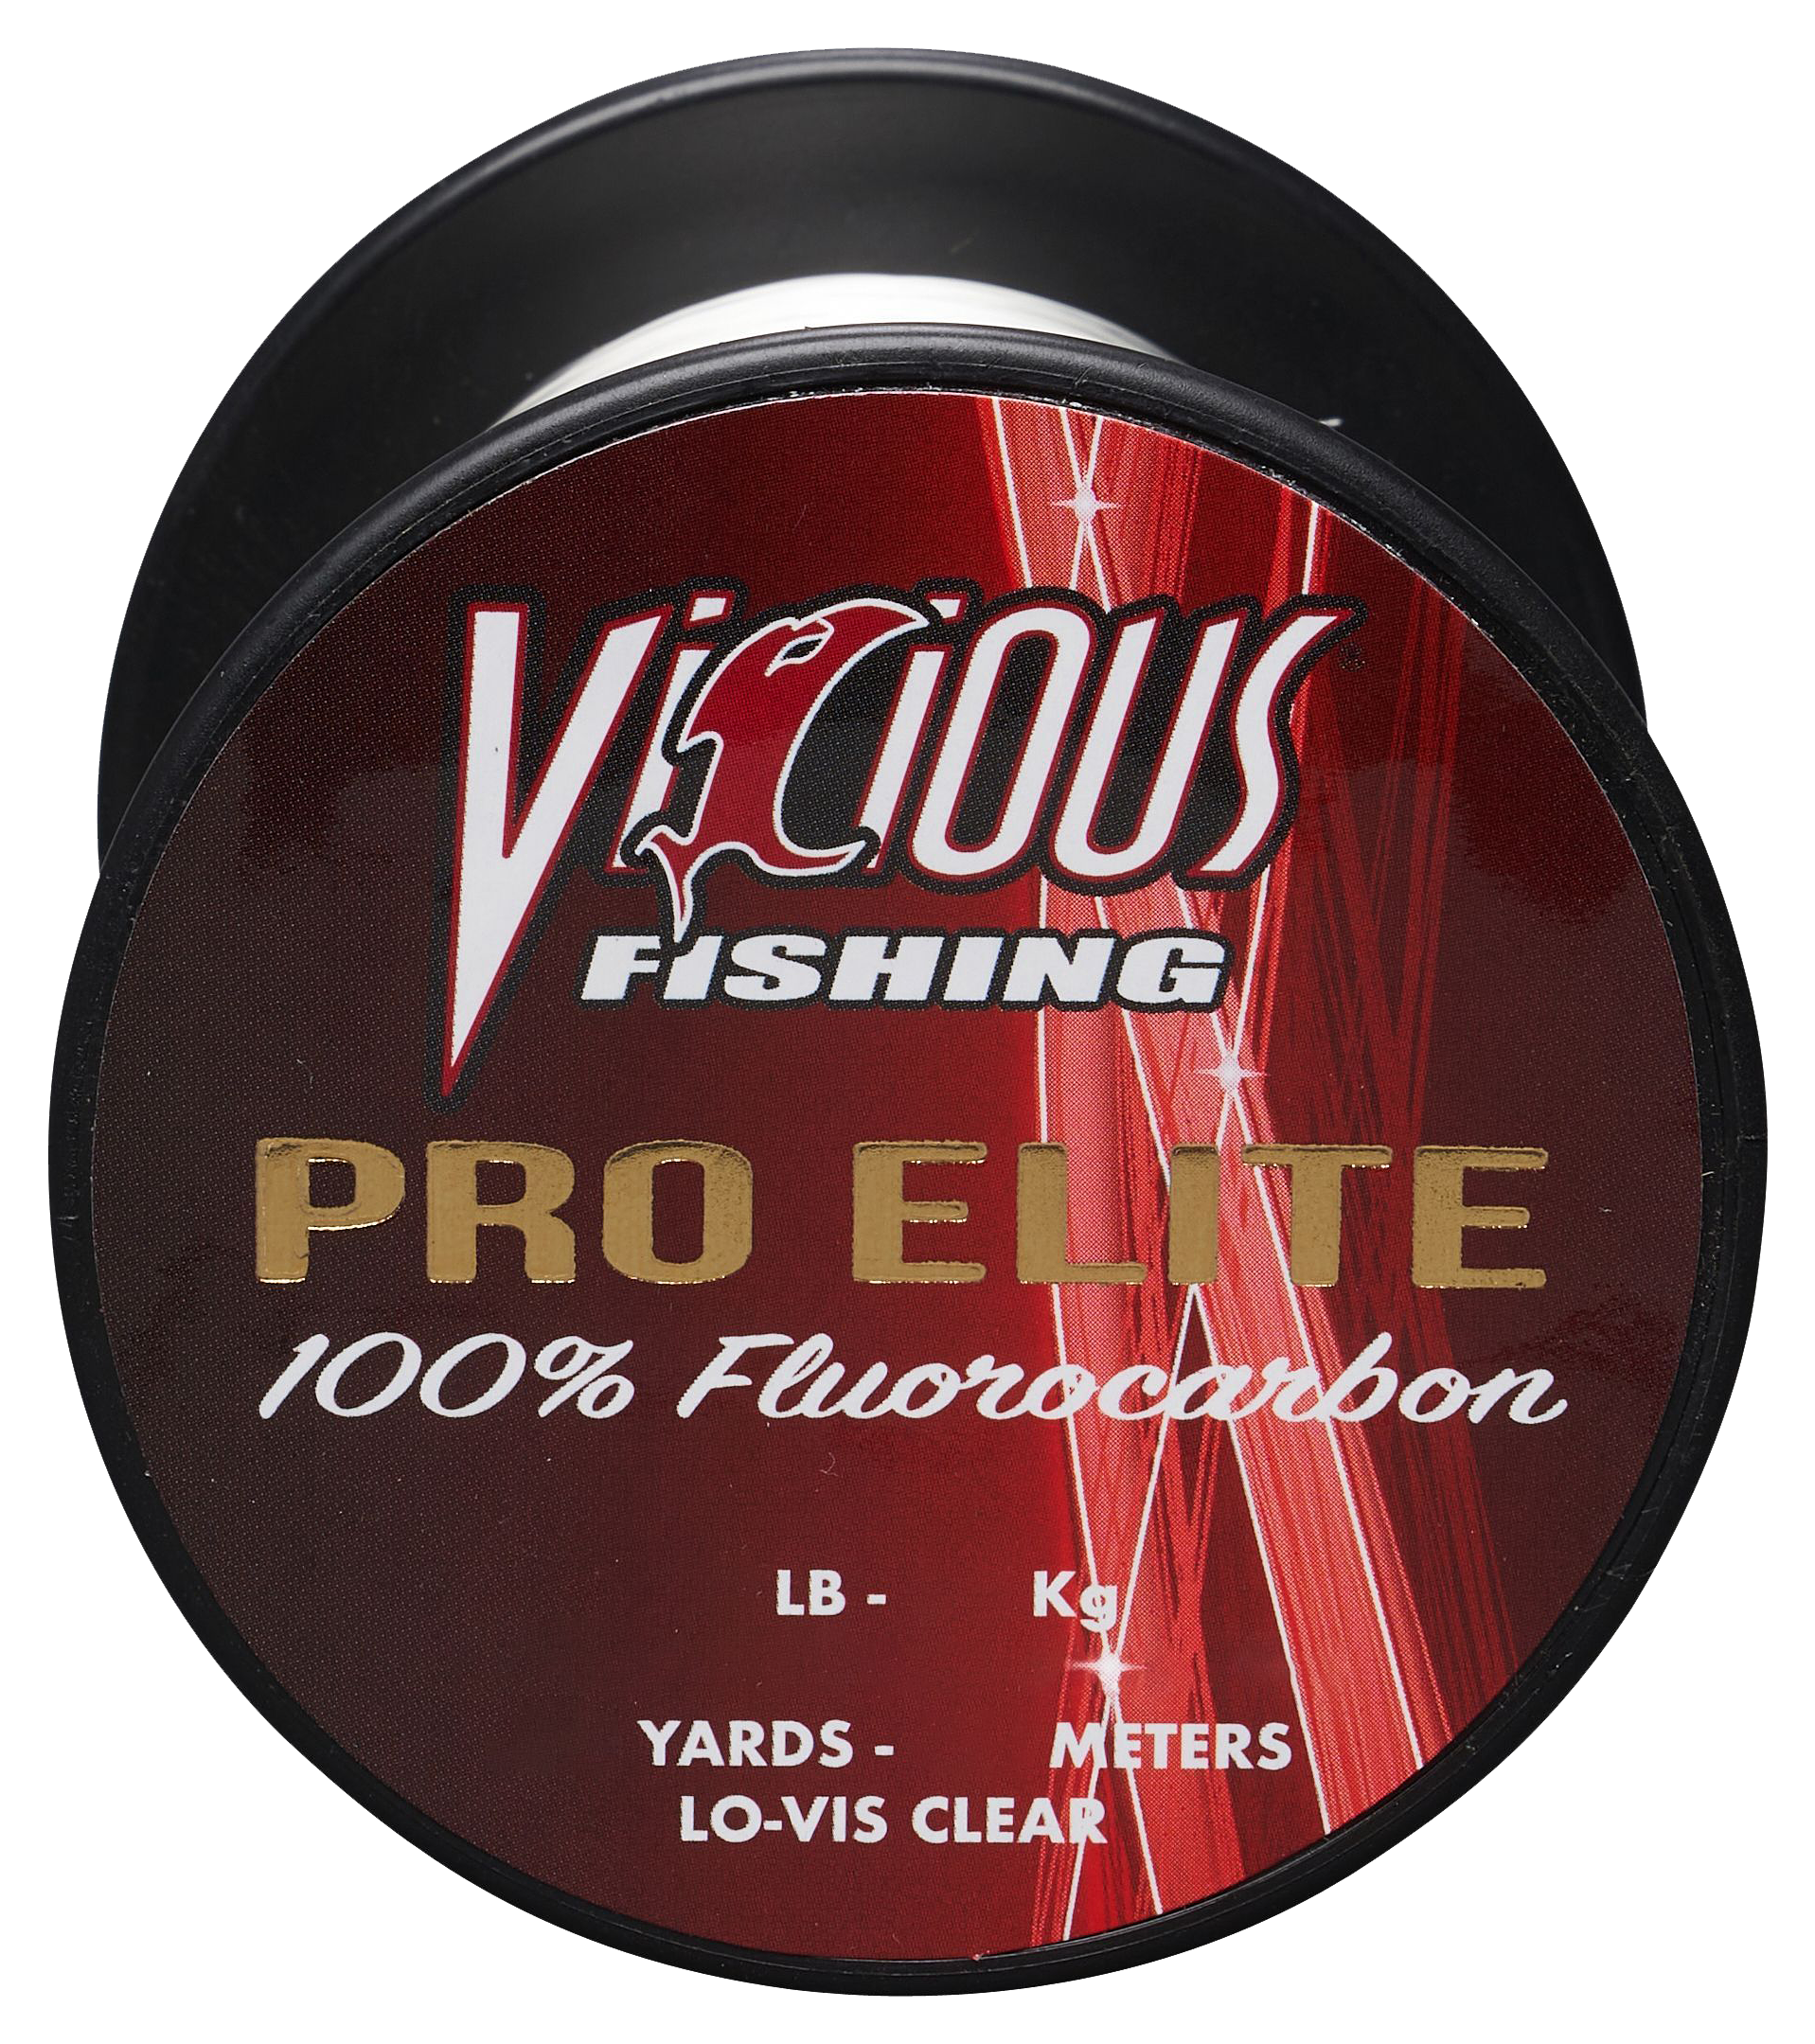 Vicious 15 lb. - 200 yards Fluorocarbon Fishing Line